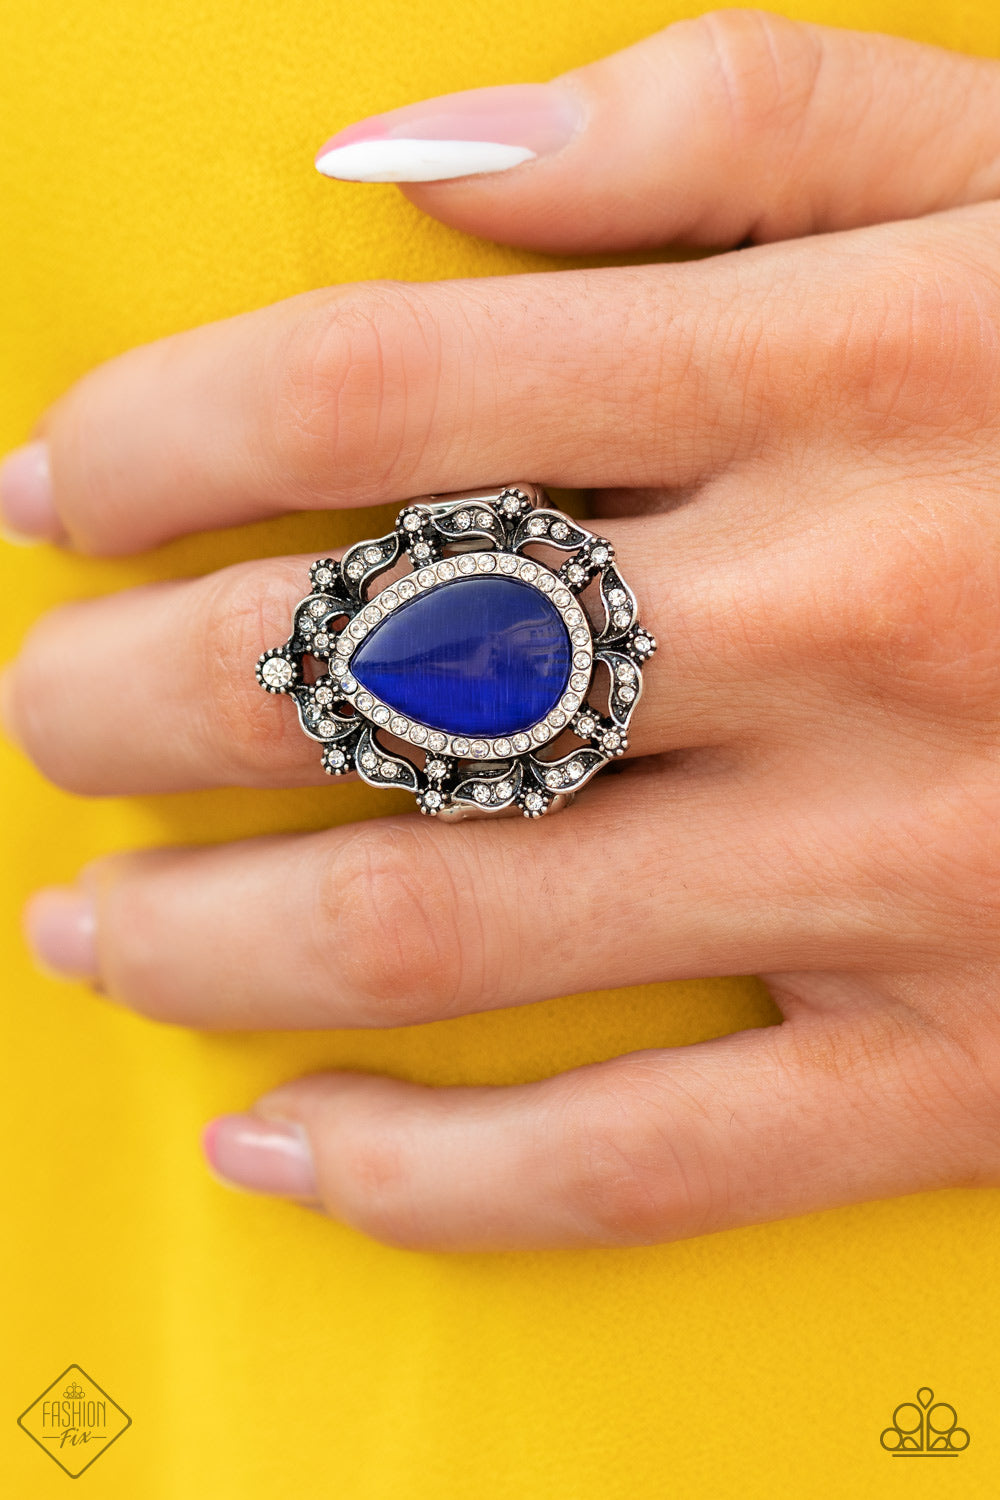 Paparazzi Ring ~ Iridescently Icy - Fashion Fix Nov 2020 - Blue